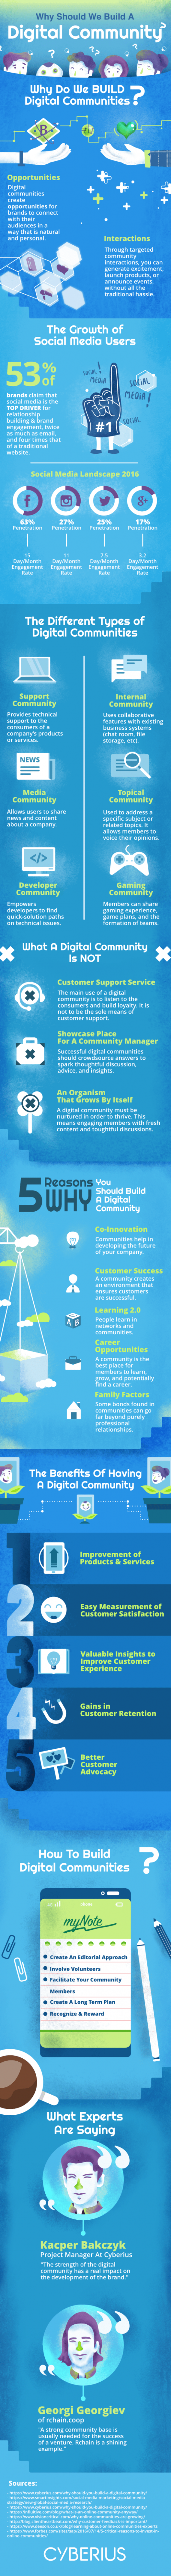 Perché costruire una community digitale